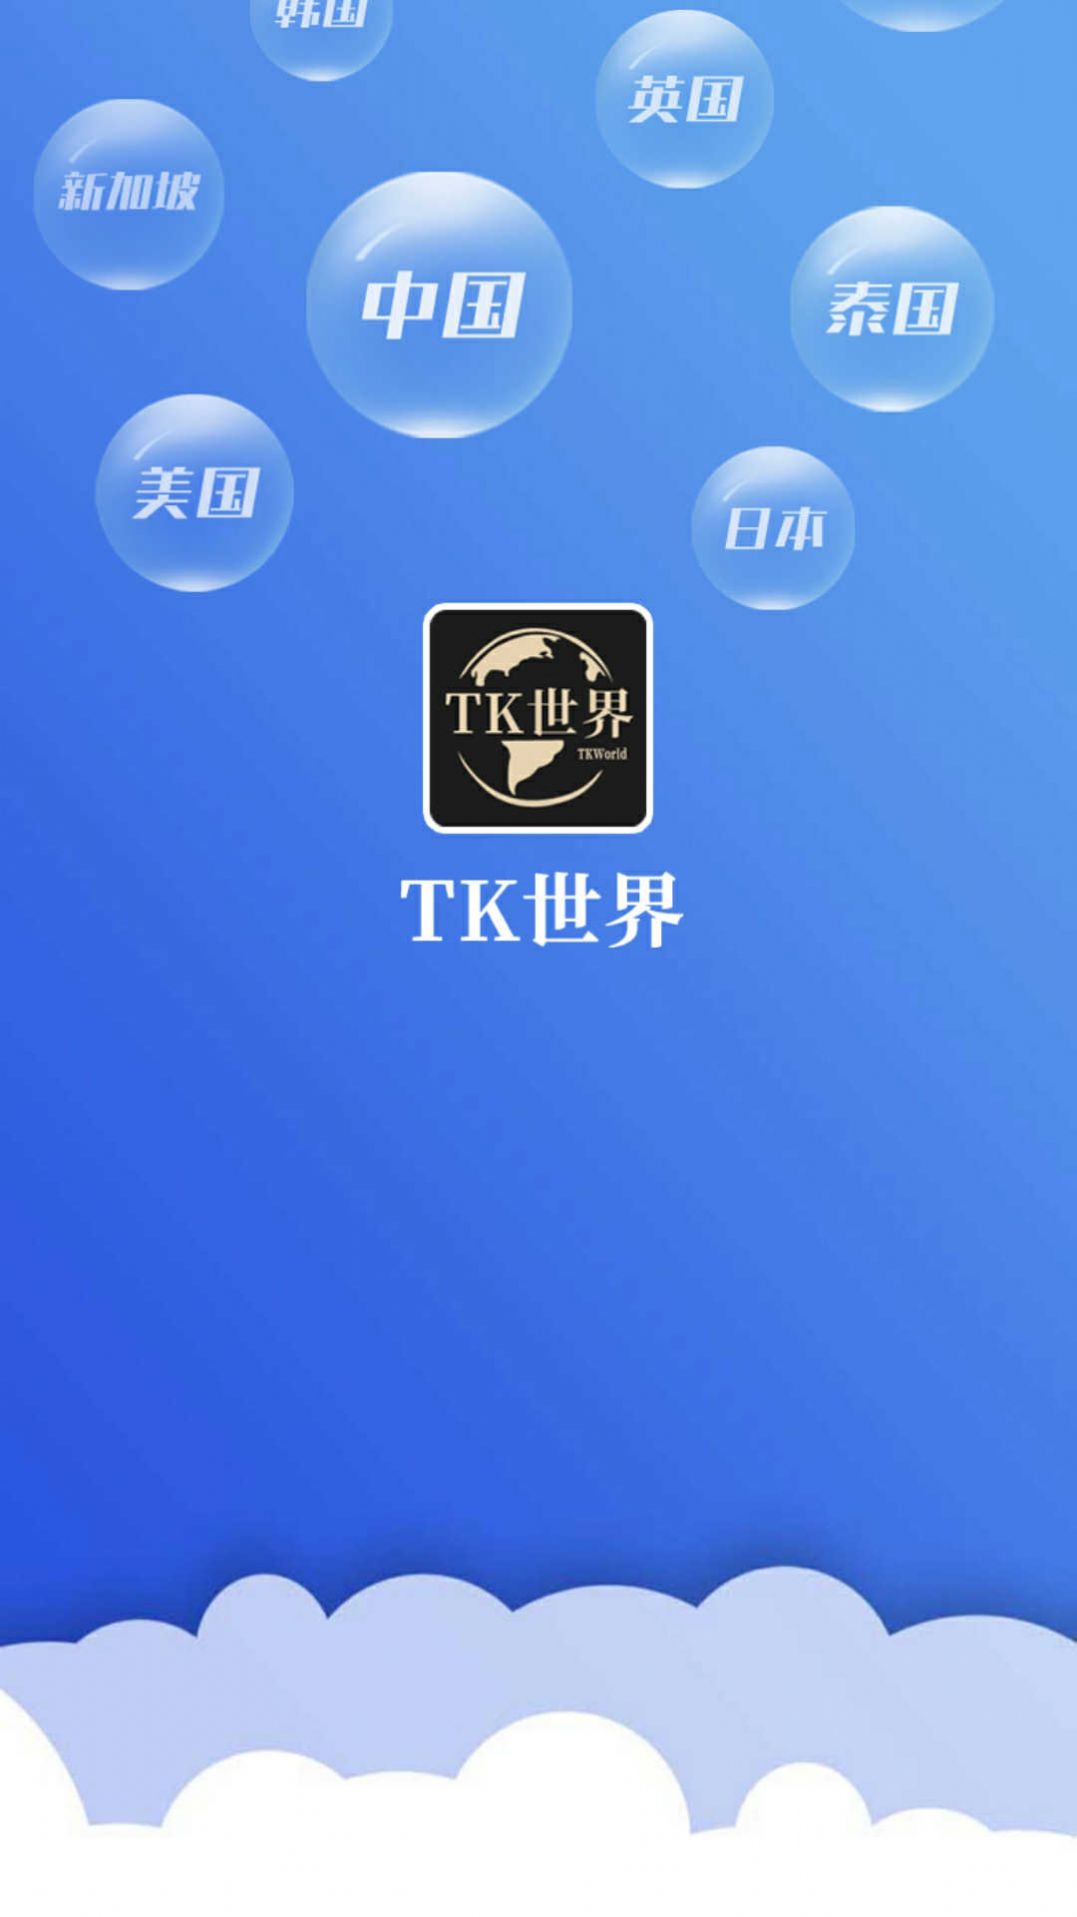 TK世界视频剪辑app官方图片1